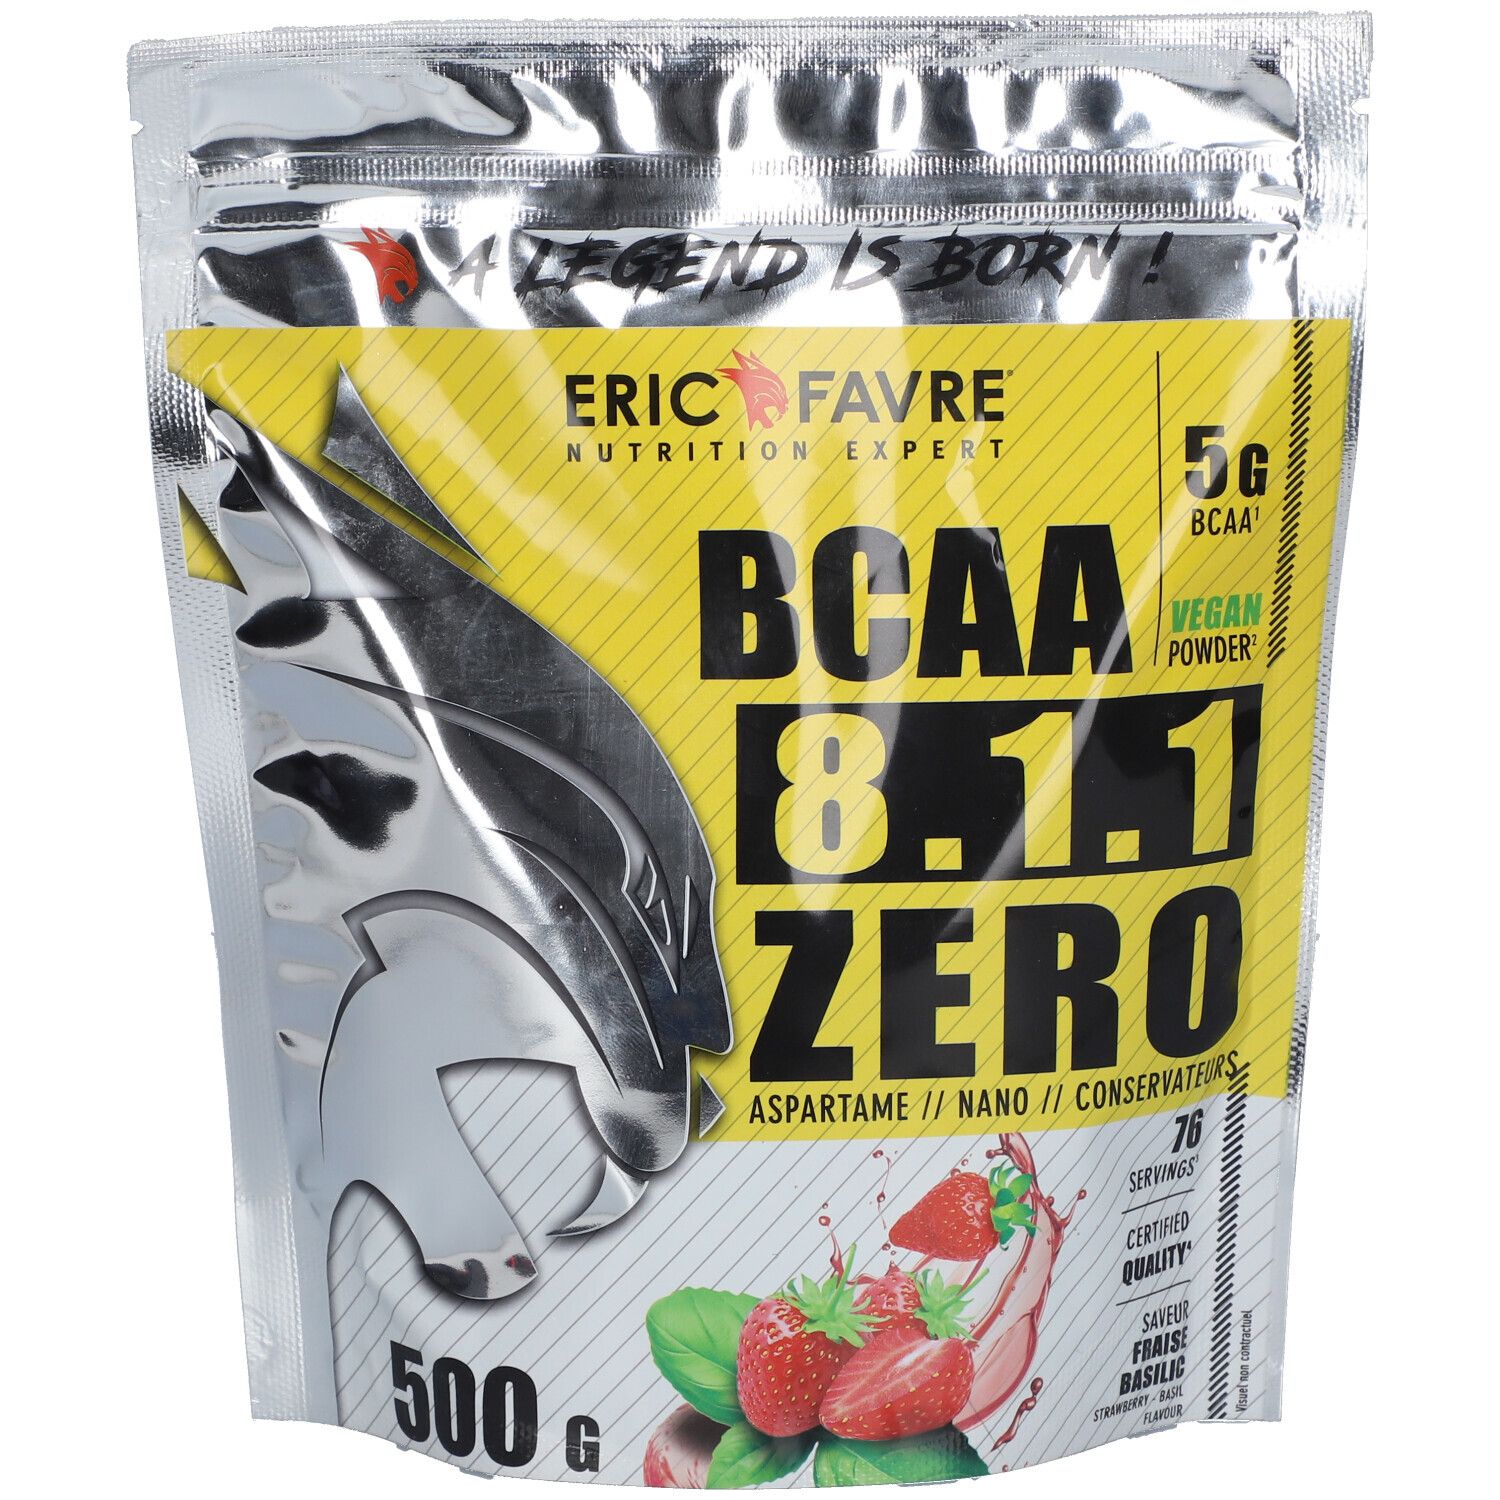 Eric Favre Bcaa 8.1.1 Zero Vegan Saveur fraise basilic